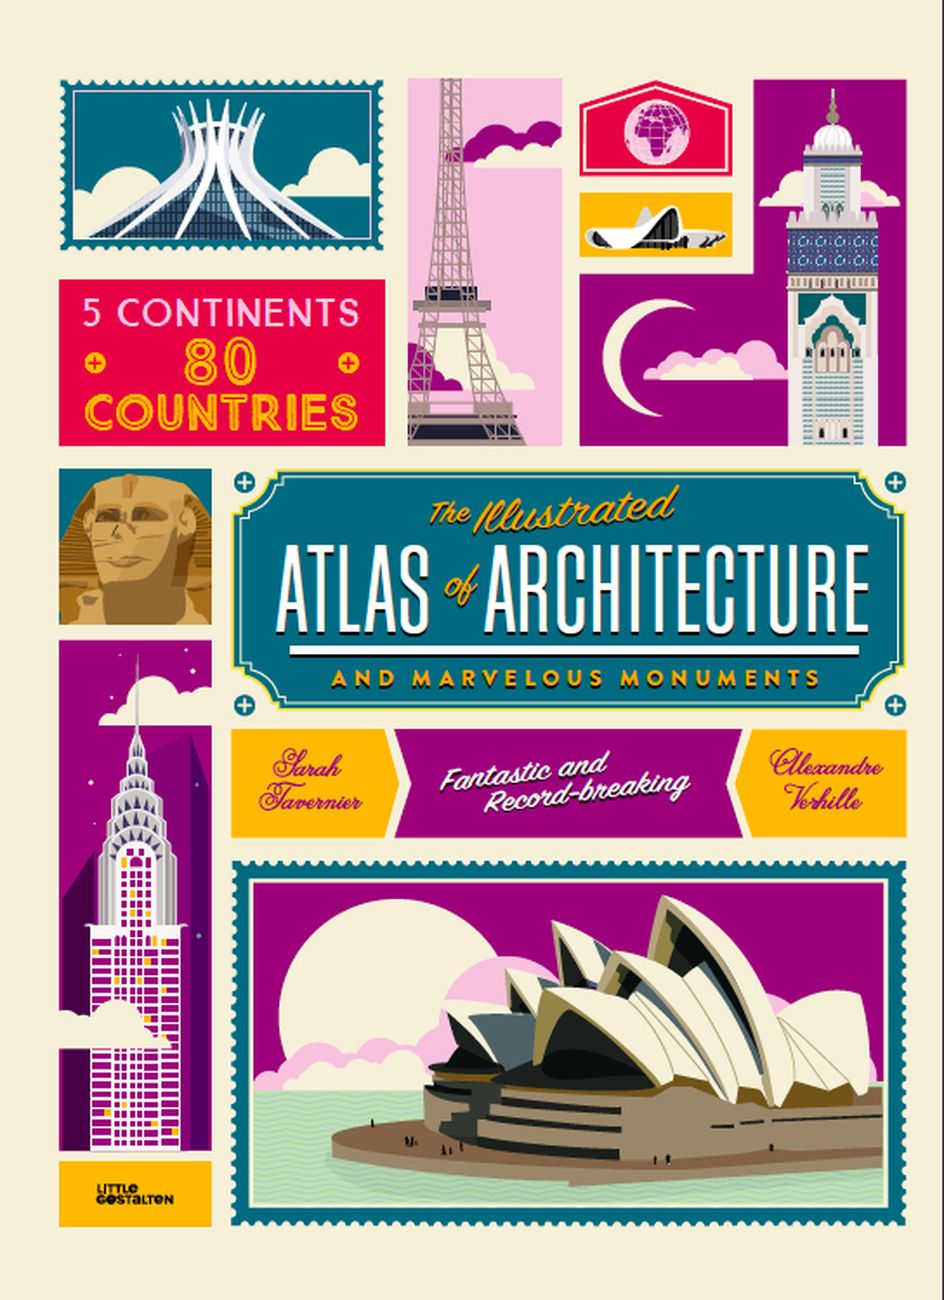 Sarah Tavernier & Alexandre Verhille – The Illustrated Atlas of Architecture and Marvelous Monuments (Gestalten, Berlino 2016)